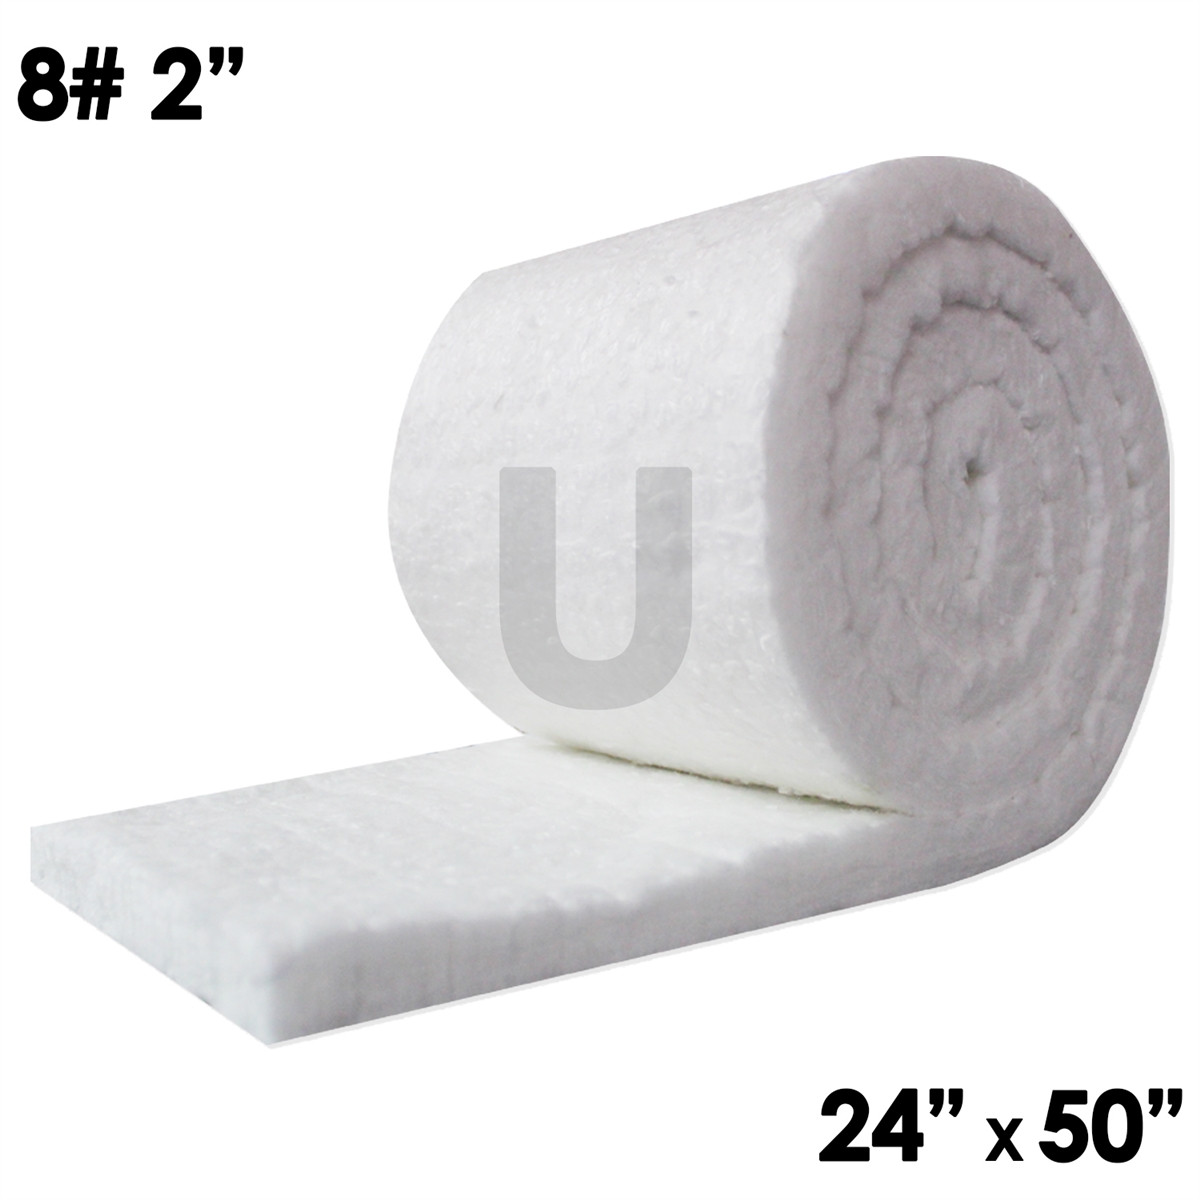 UniTherm Ceramic Fiber Blanket, 8lb, 2